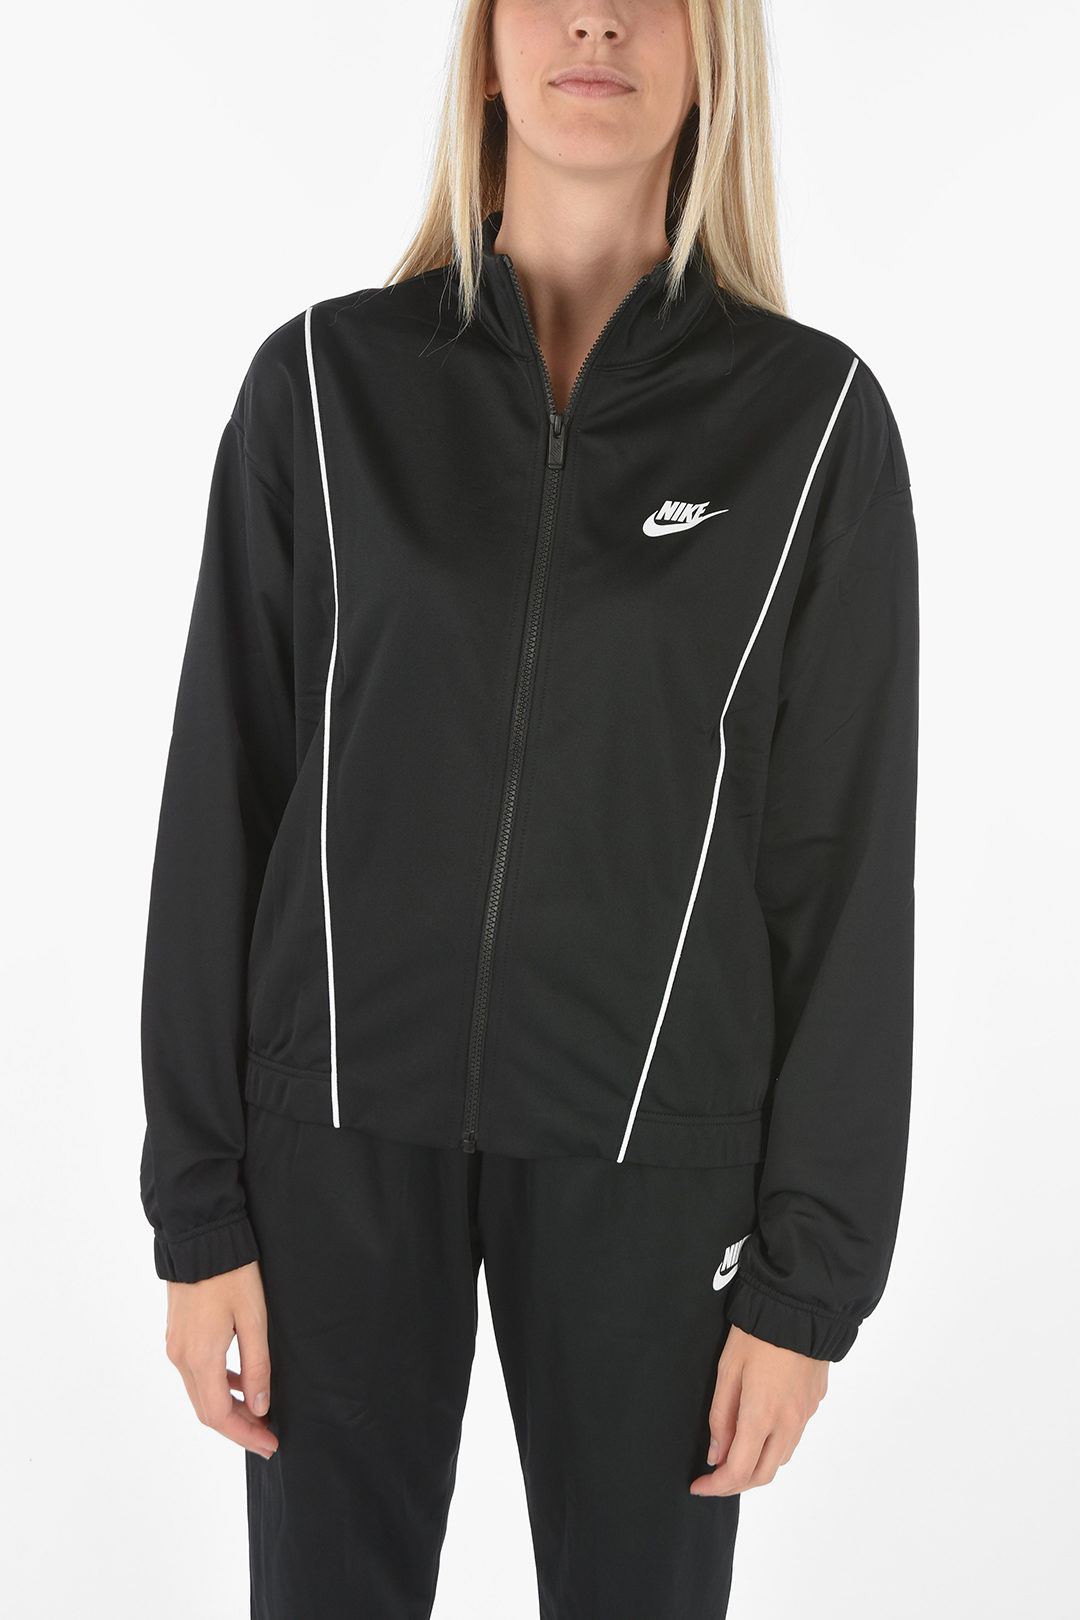 Nike Jogger and Sweatshirt Set women - Glamood Outlet